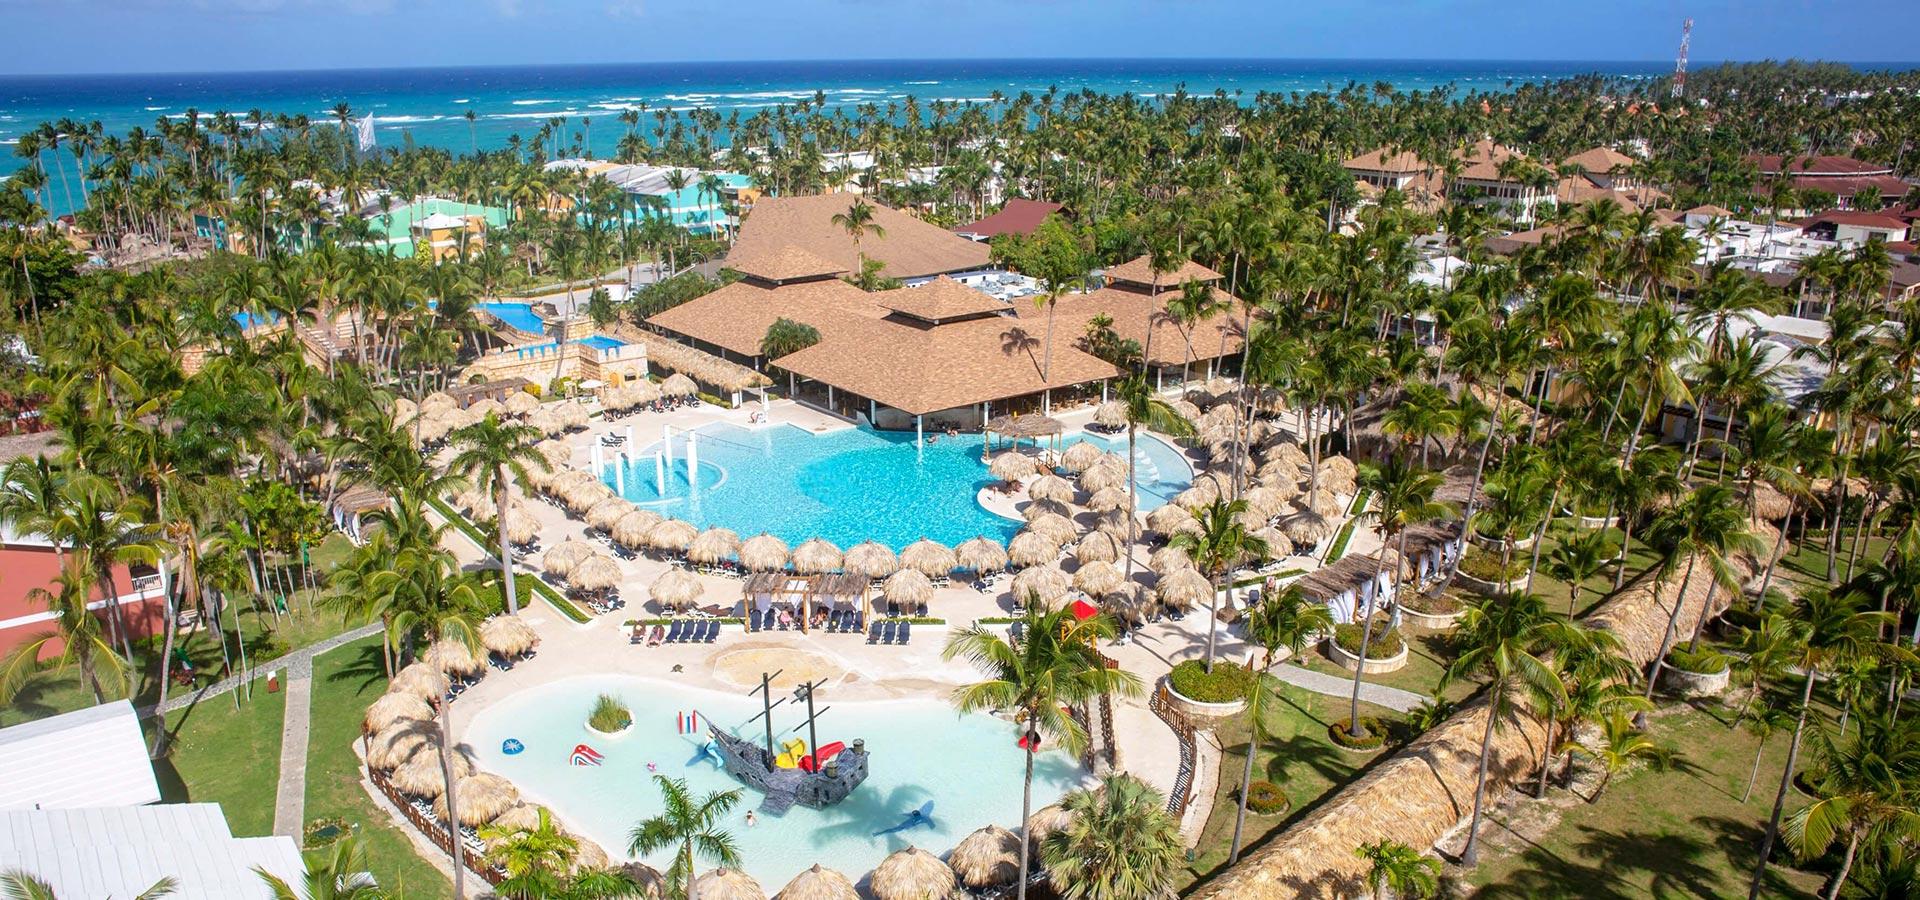 Фото Grand Palladium Punta Cana Resort